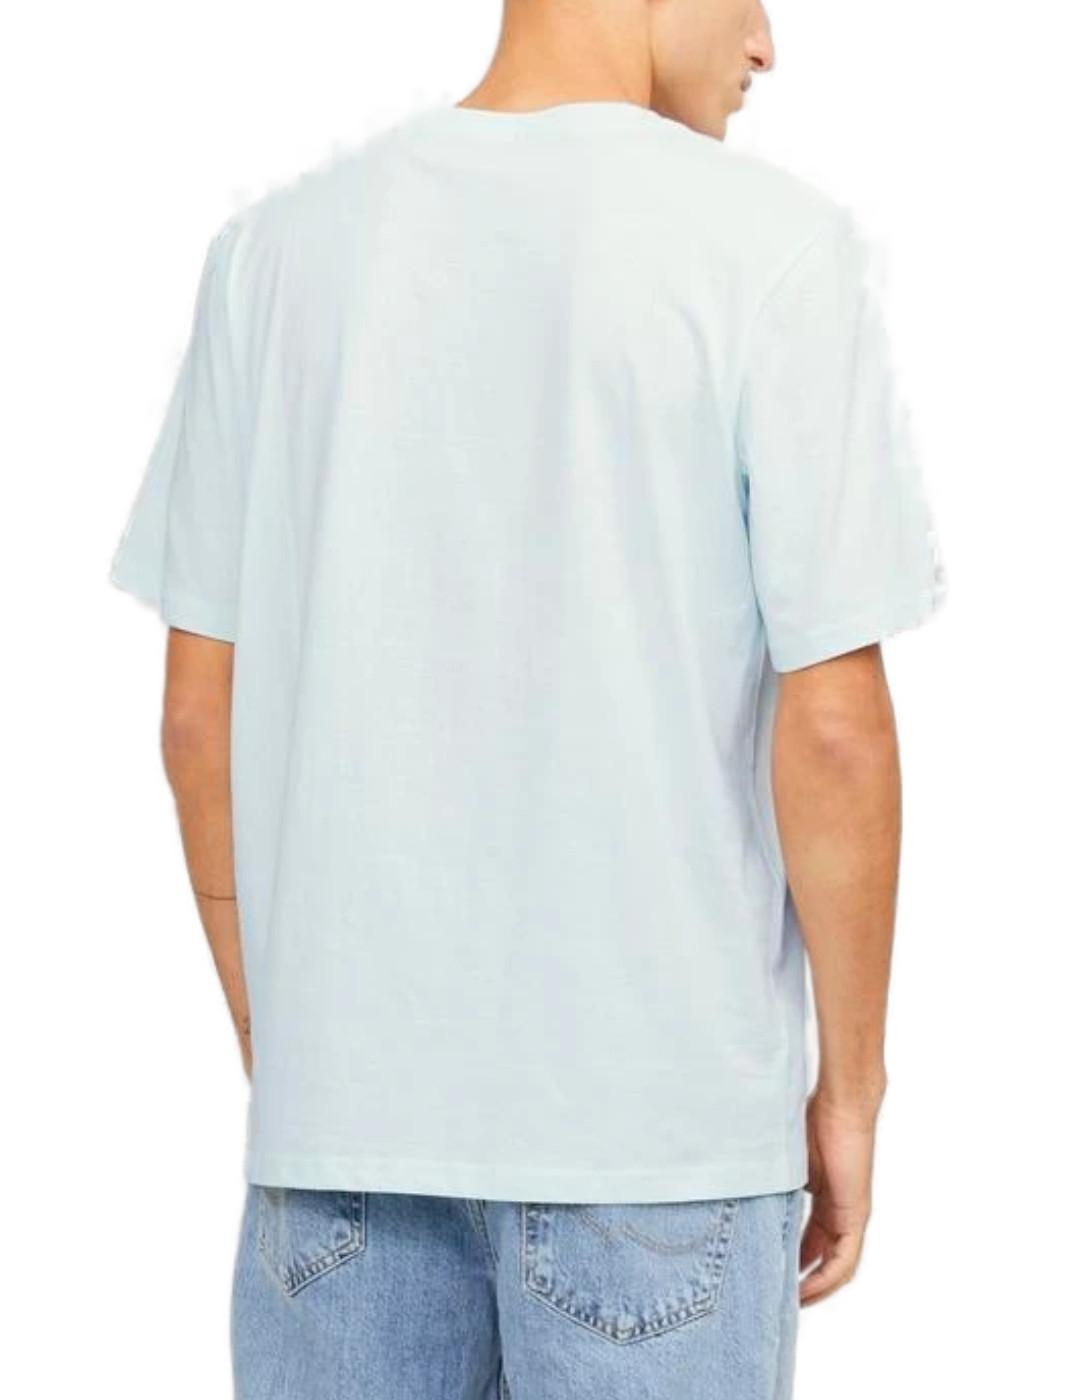 Camiseta Jack&Jones Cobin azul manga corta para hombre